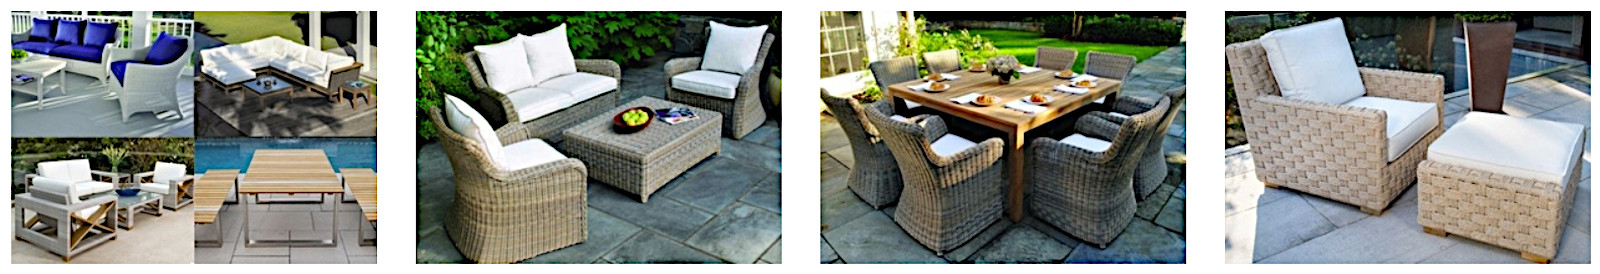 Cut-price Kingsley Bate teak garden furniture